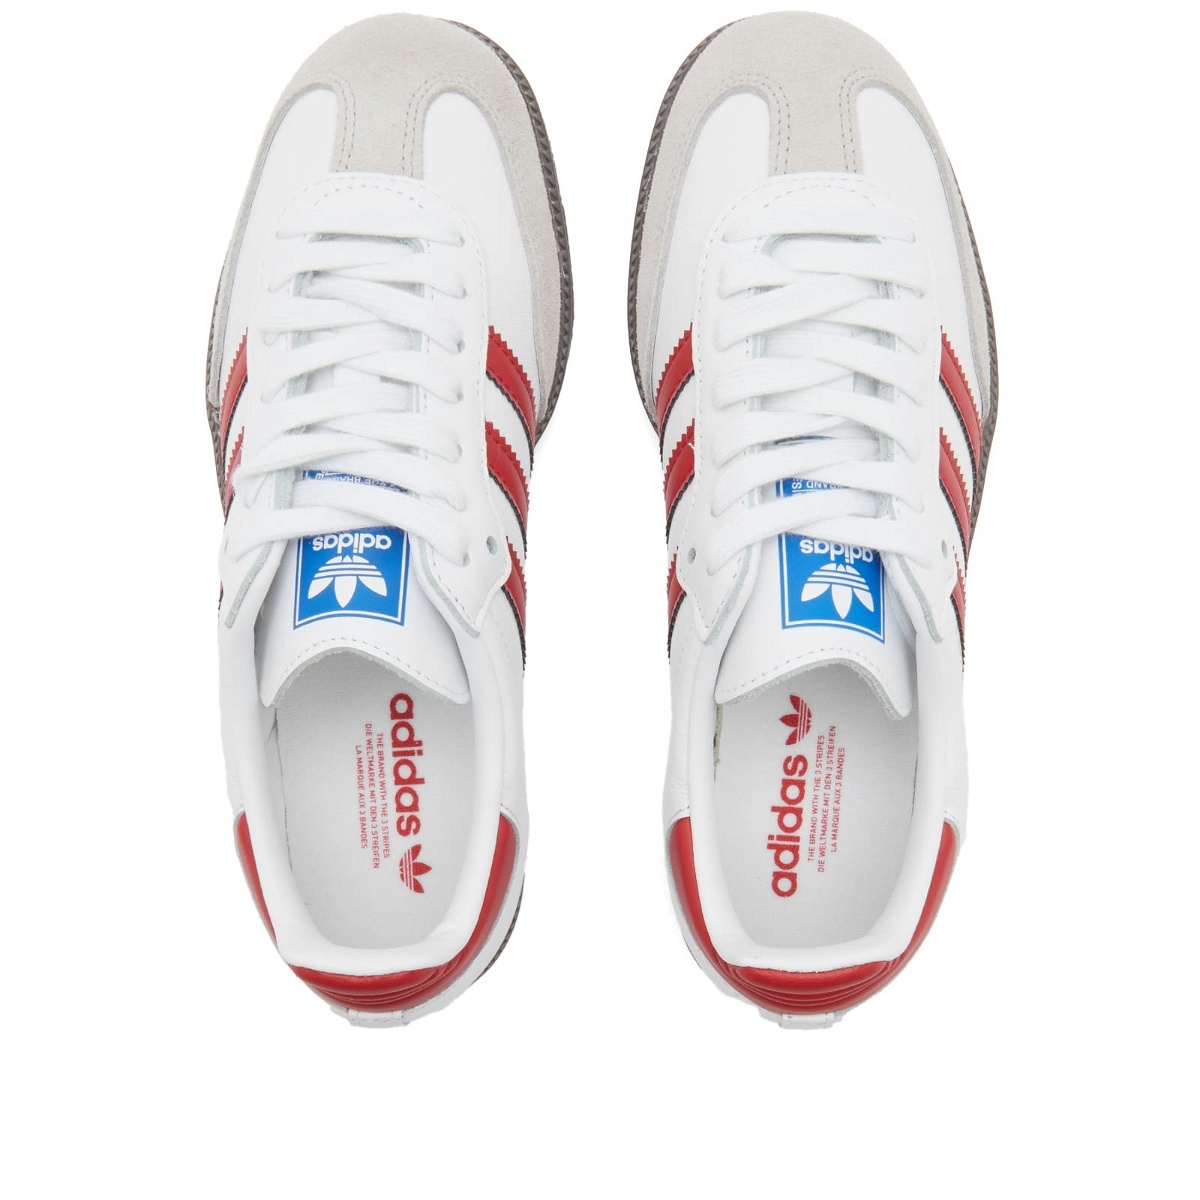 Adidas Samba OG Sneakers in White/Better Scarlet adidas